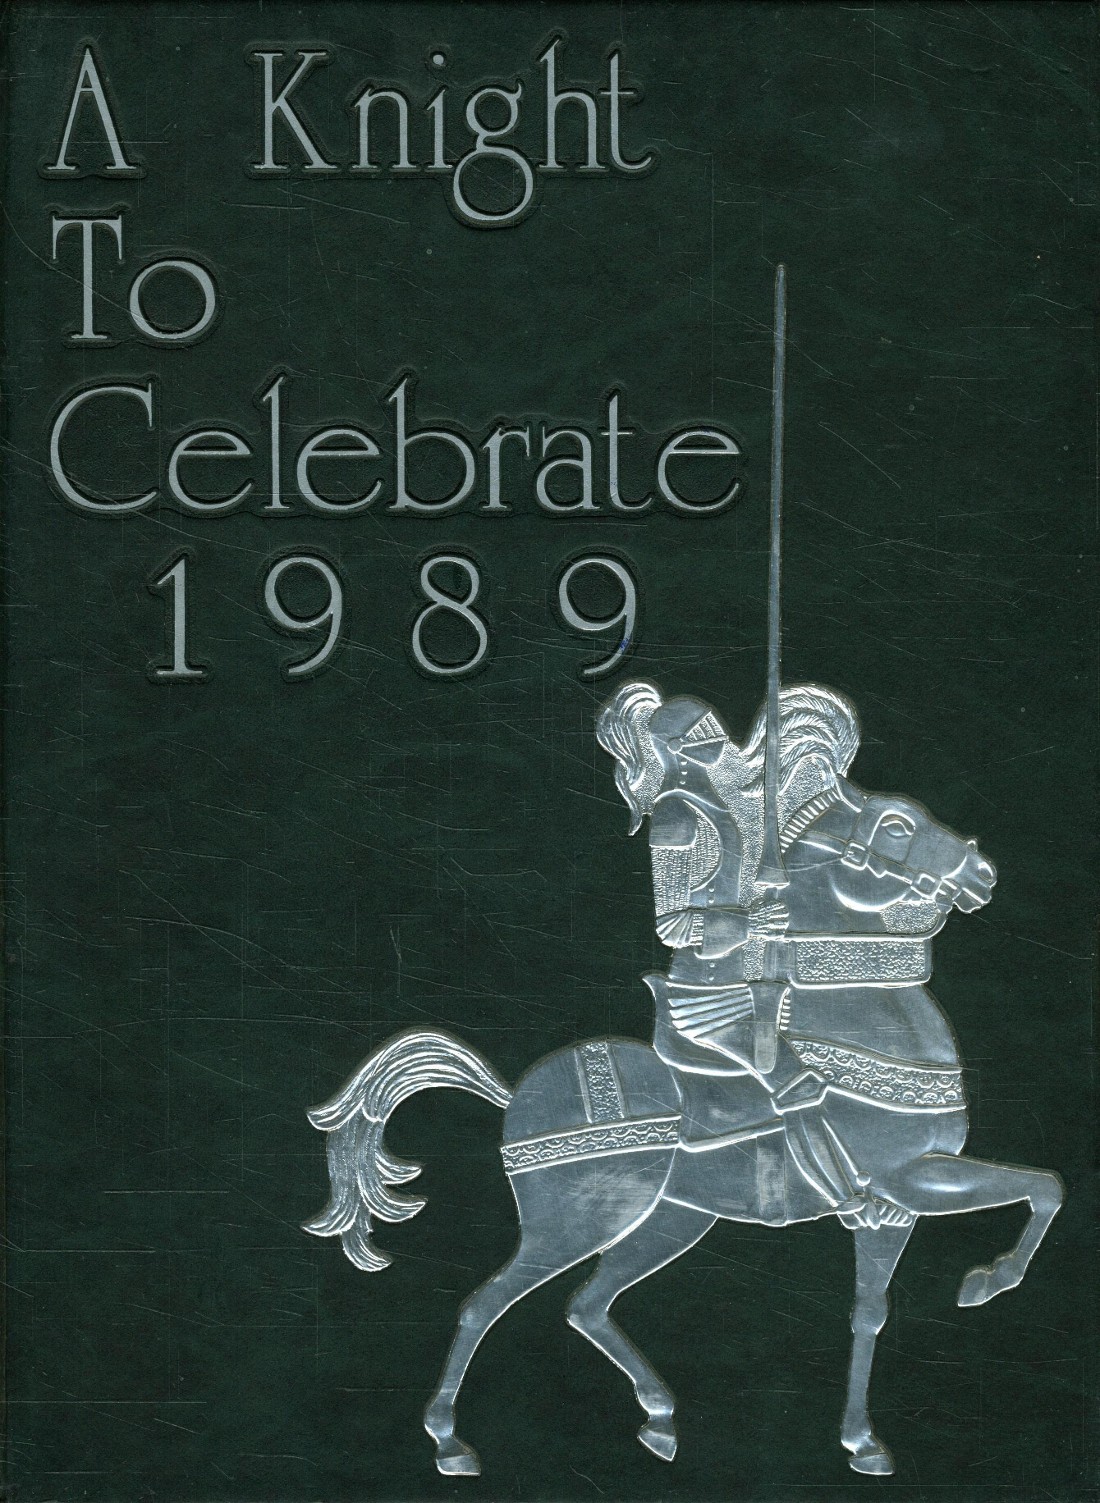 1989 yearbook from Rex Putnam High School from Milwaukie Oregon